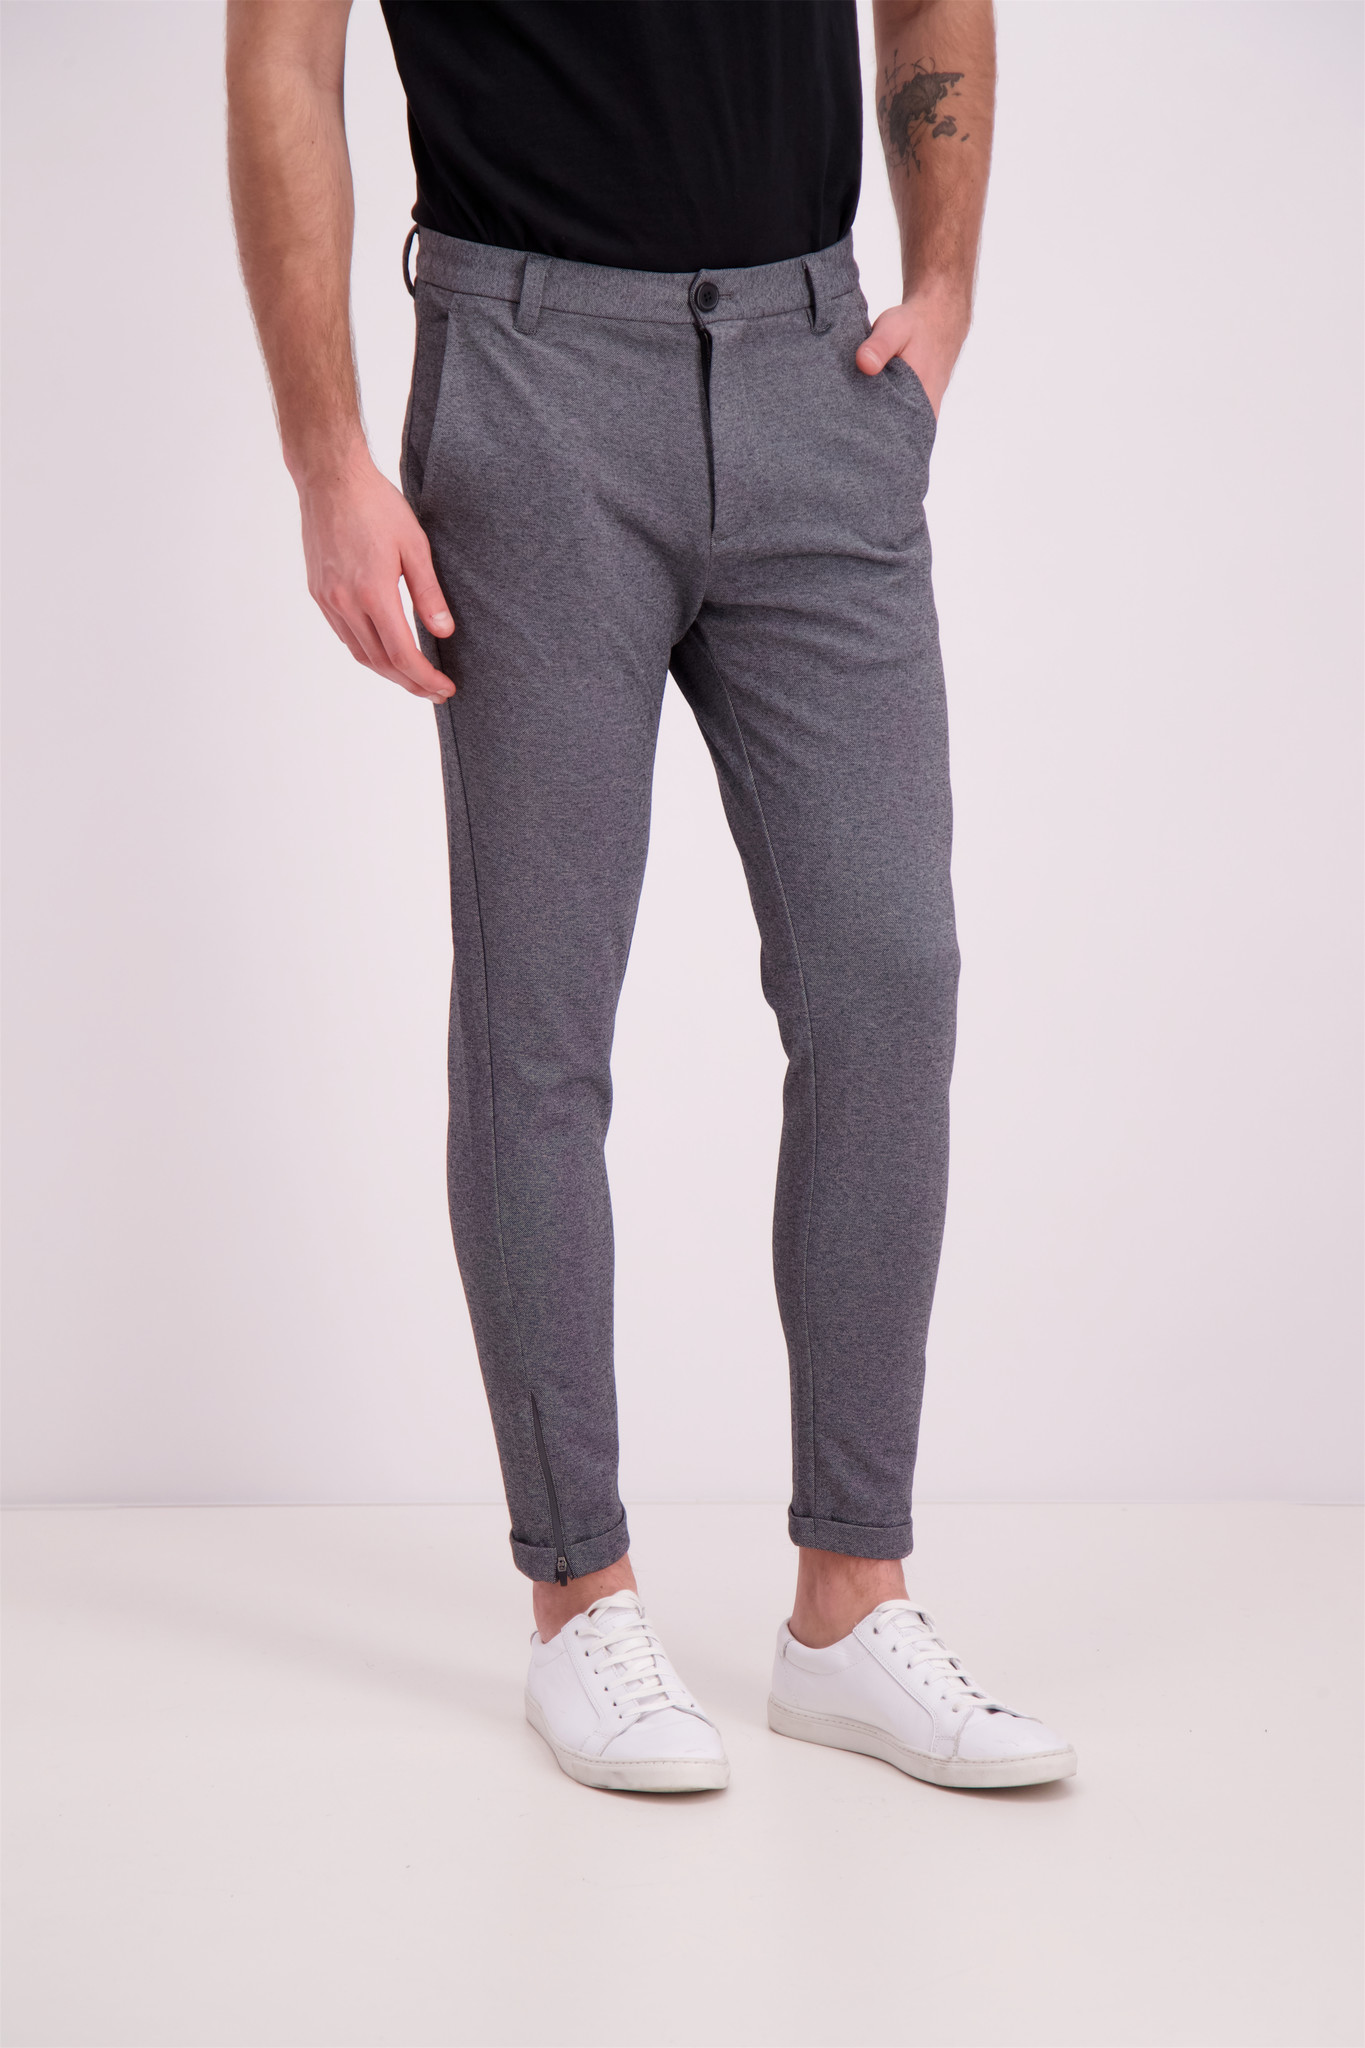 Men's Cropped Pants & Jeans | Men's Ankle & Capri Pants | ASOS